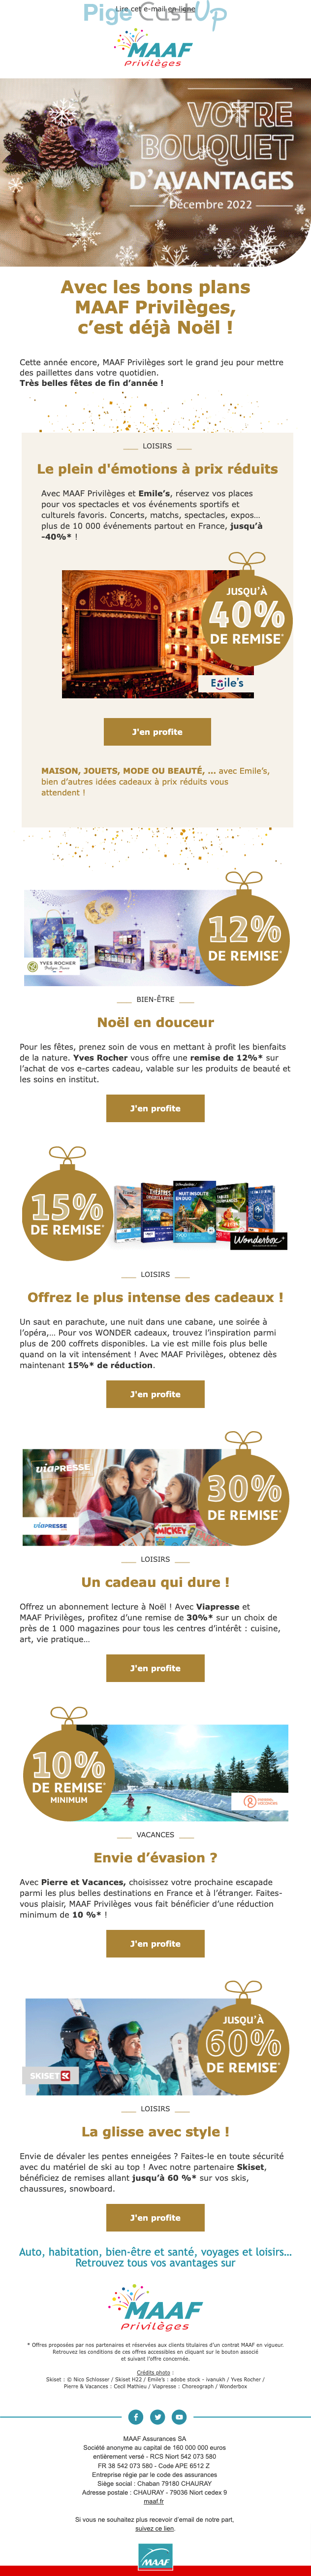 Exemple de Type de media  e-mailing - Maaf - Marketing relationnel - Calendaire (Noël, St valentin, Vœux, …)